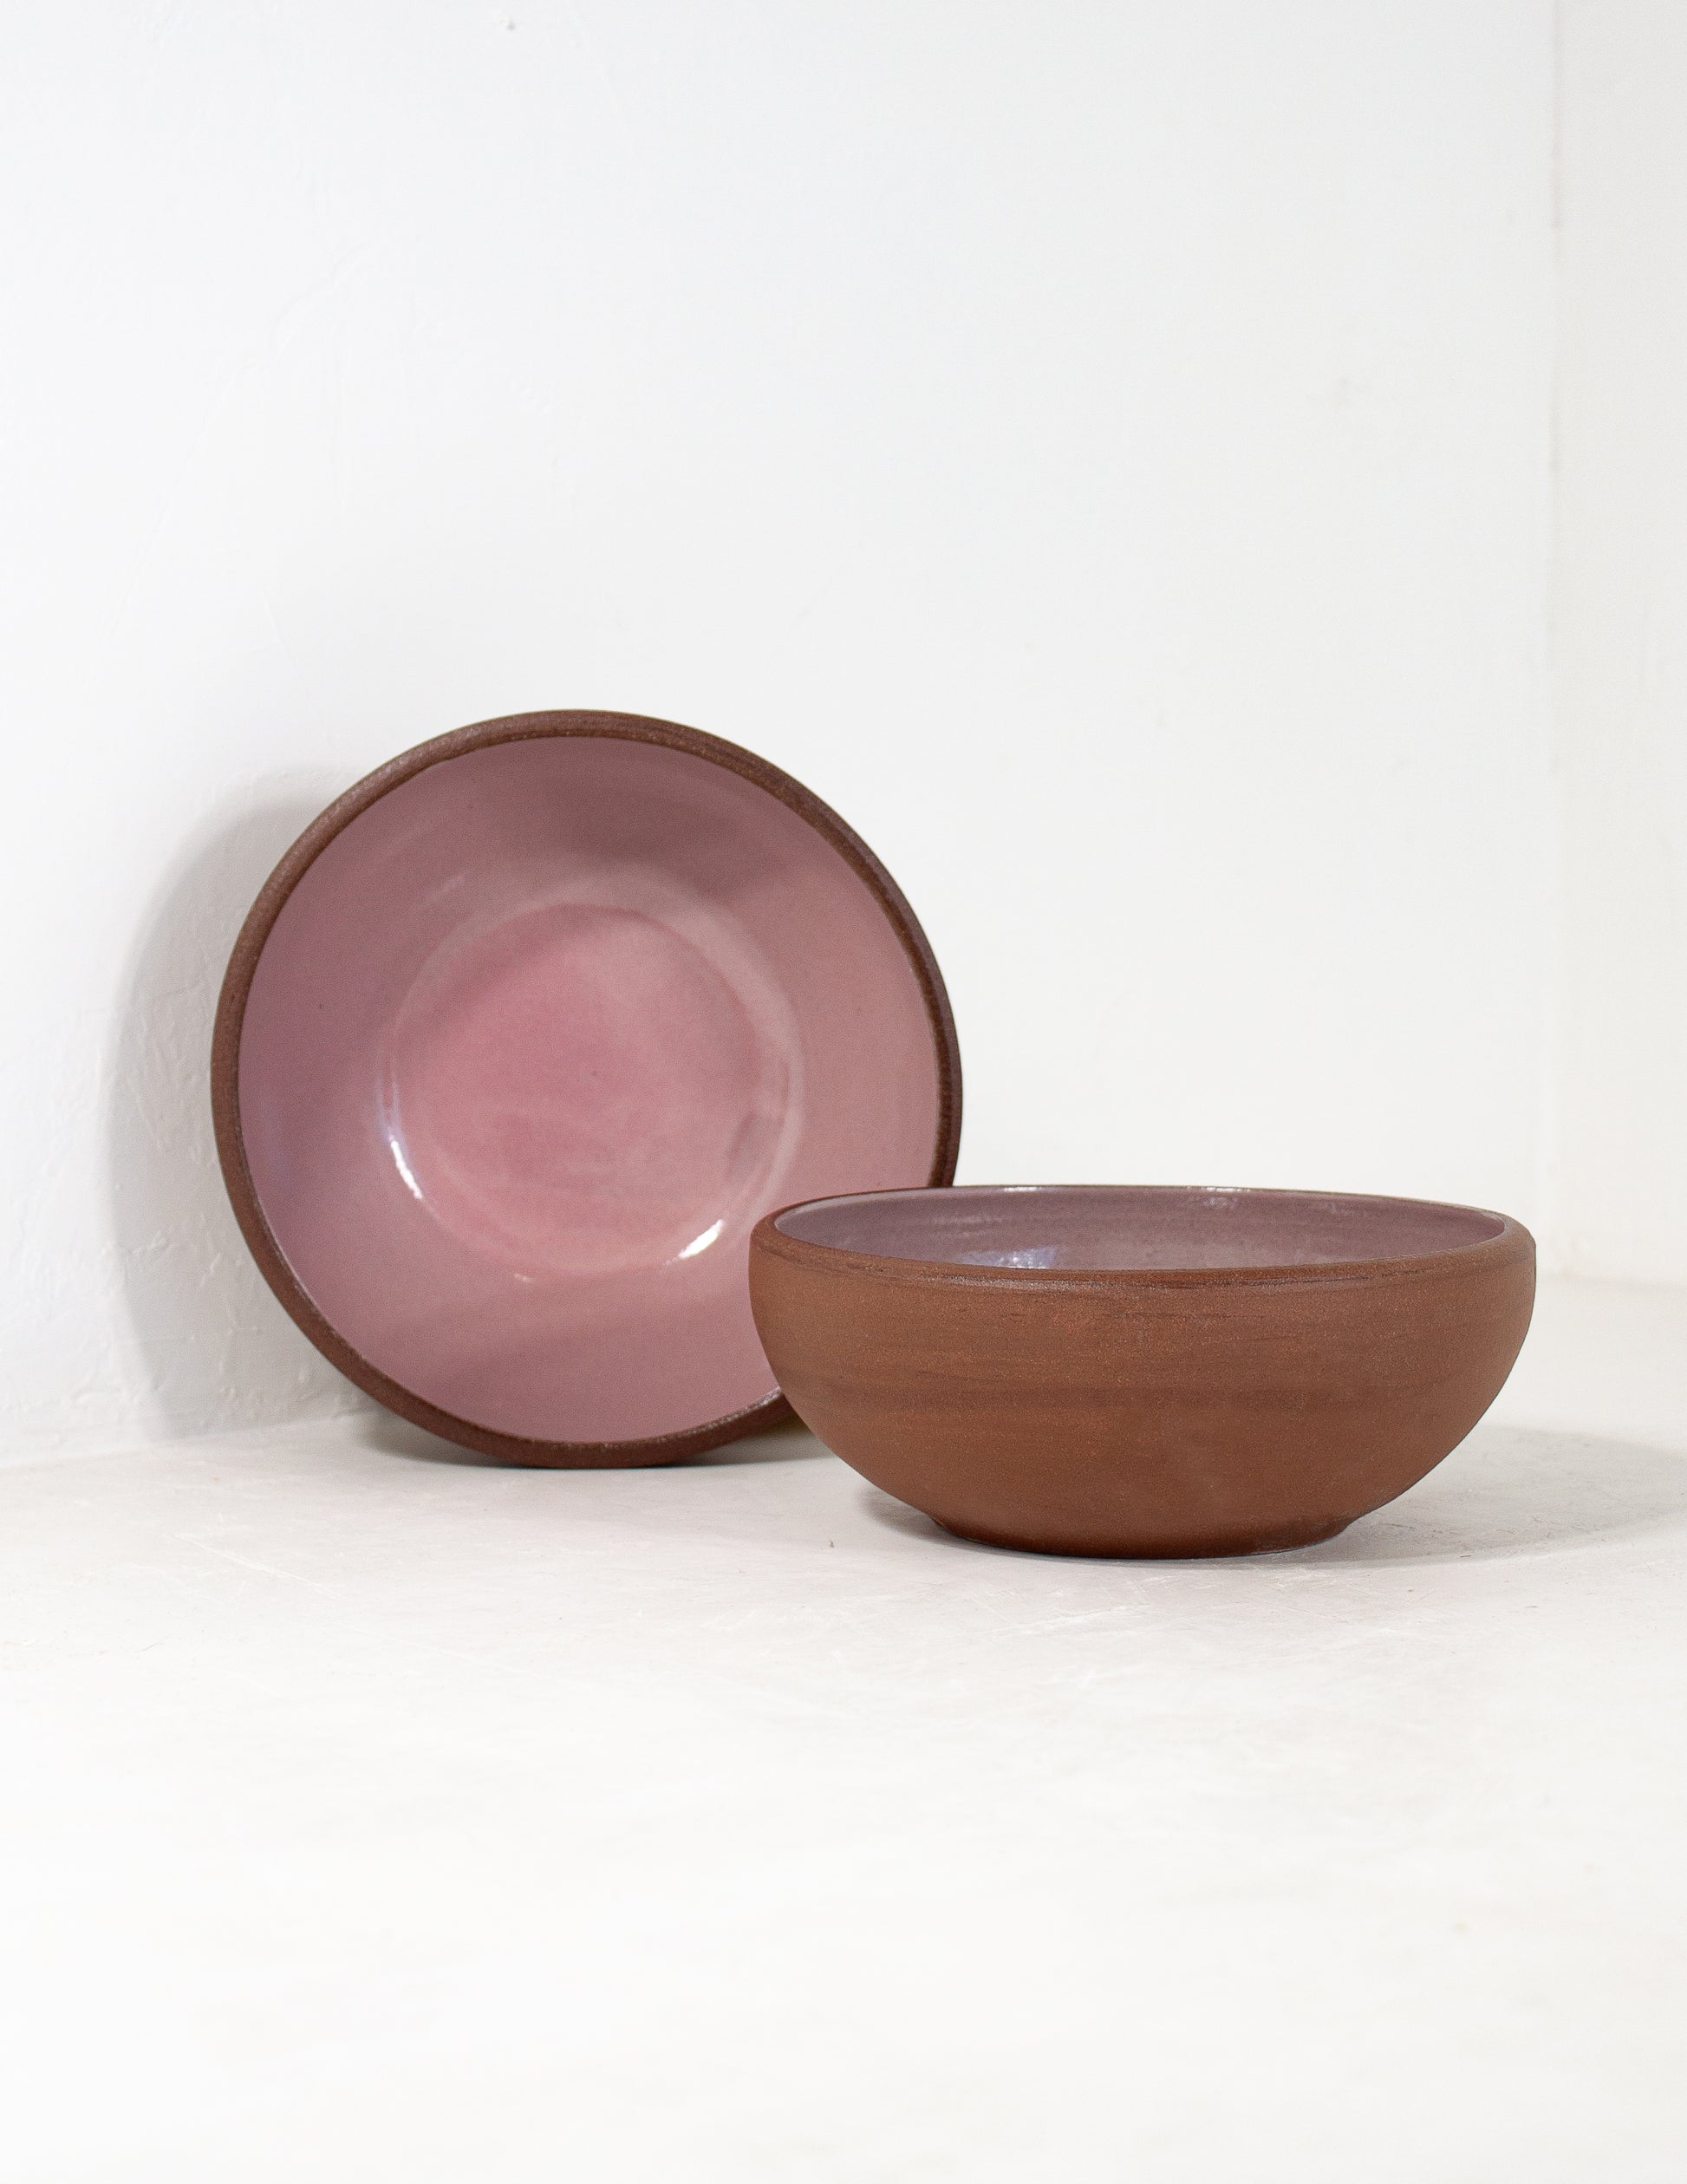 cereal bowls handmade in pink glaze